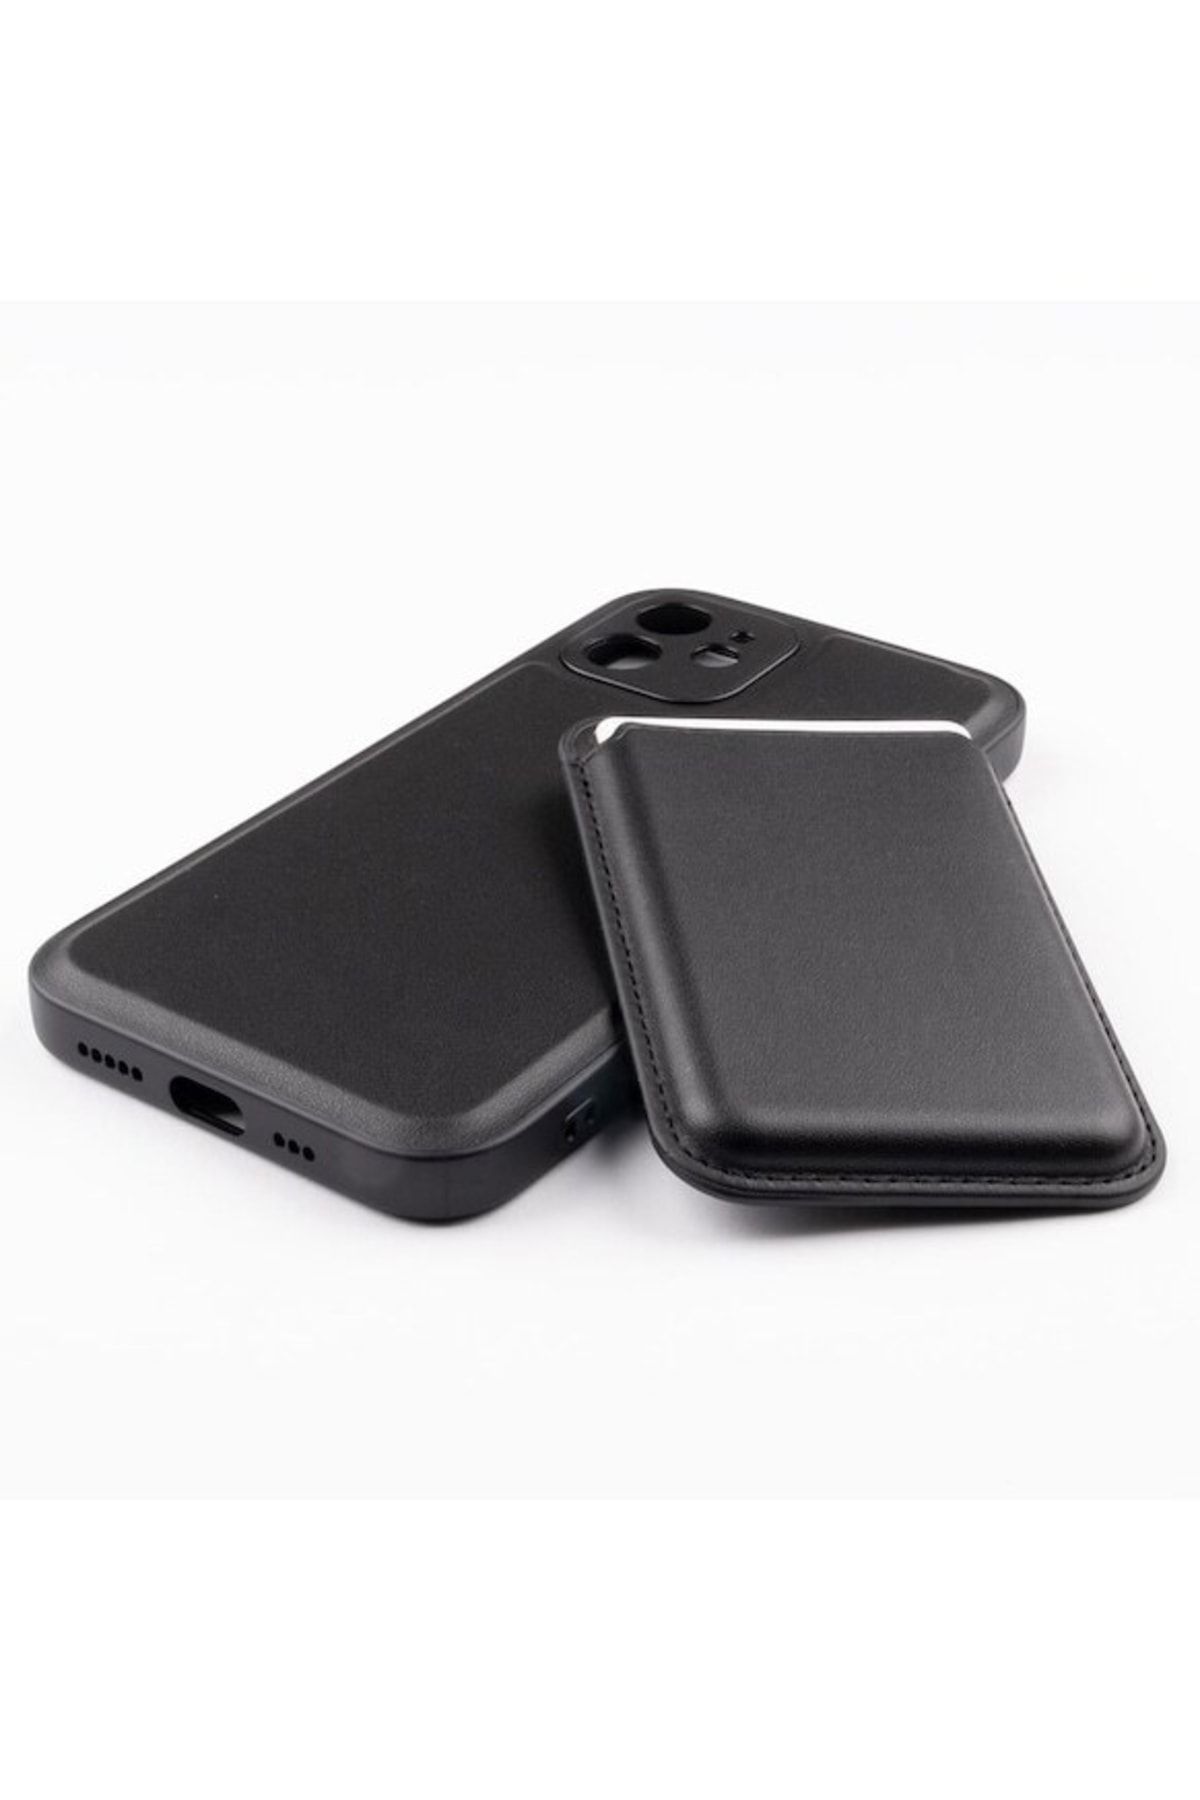 Jopus Iphone 12 Pro Max Js-275 Gravity Cüzdanli Silikon Kılıf Siyah